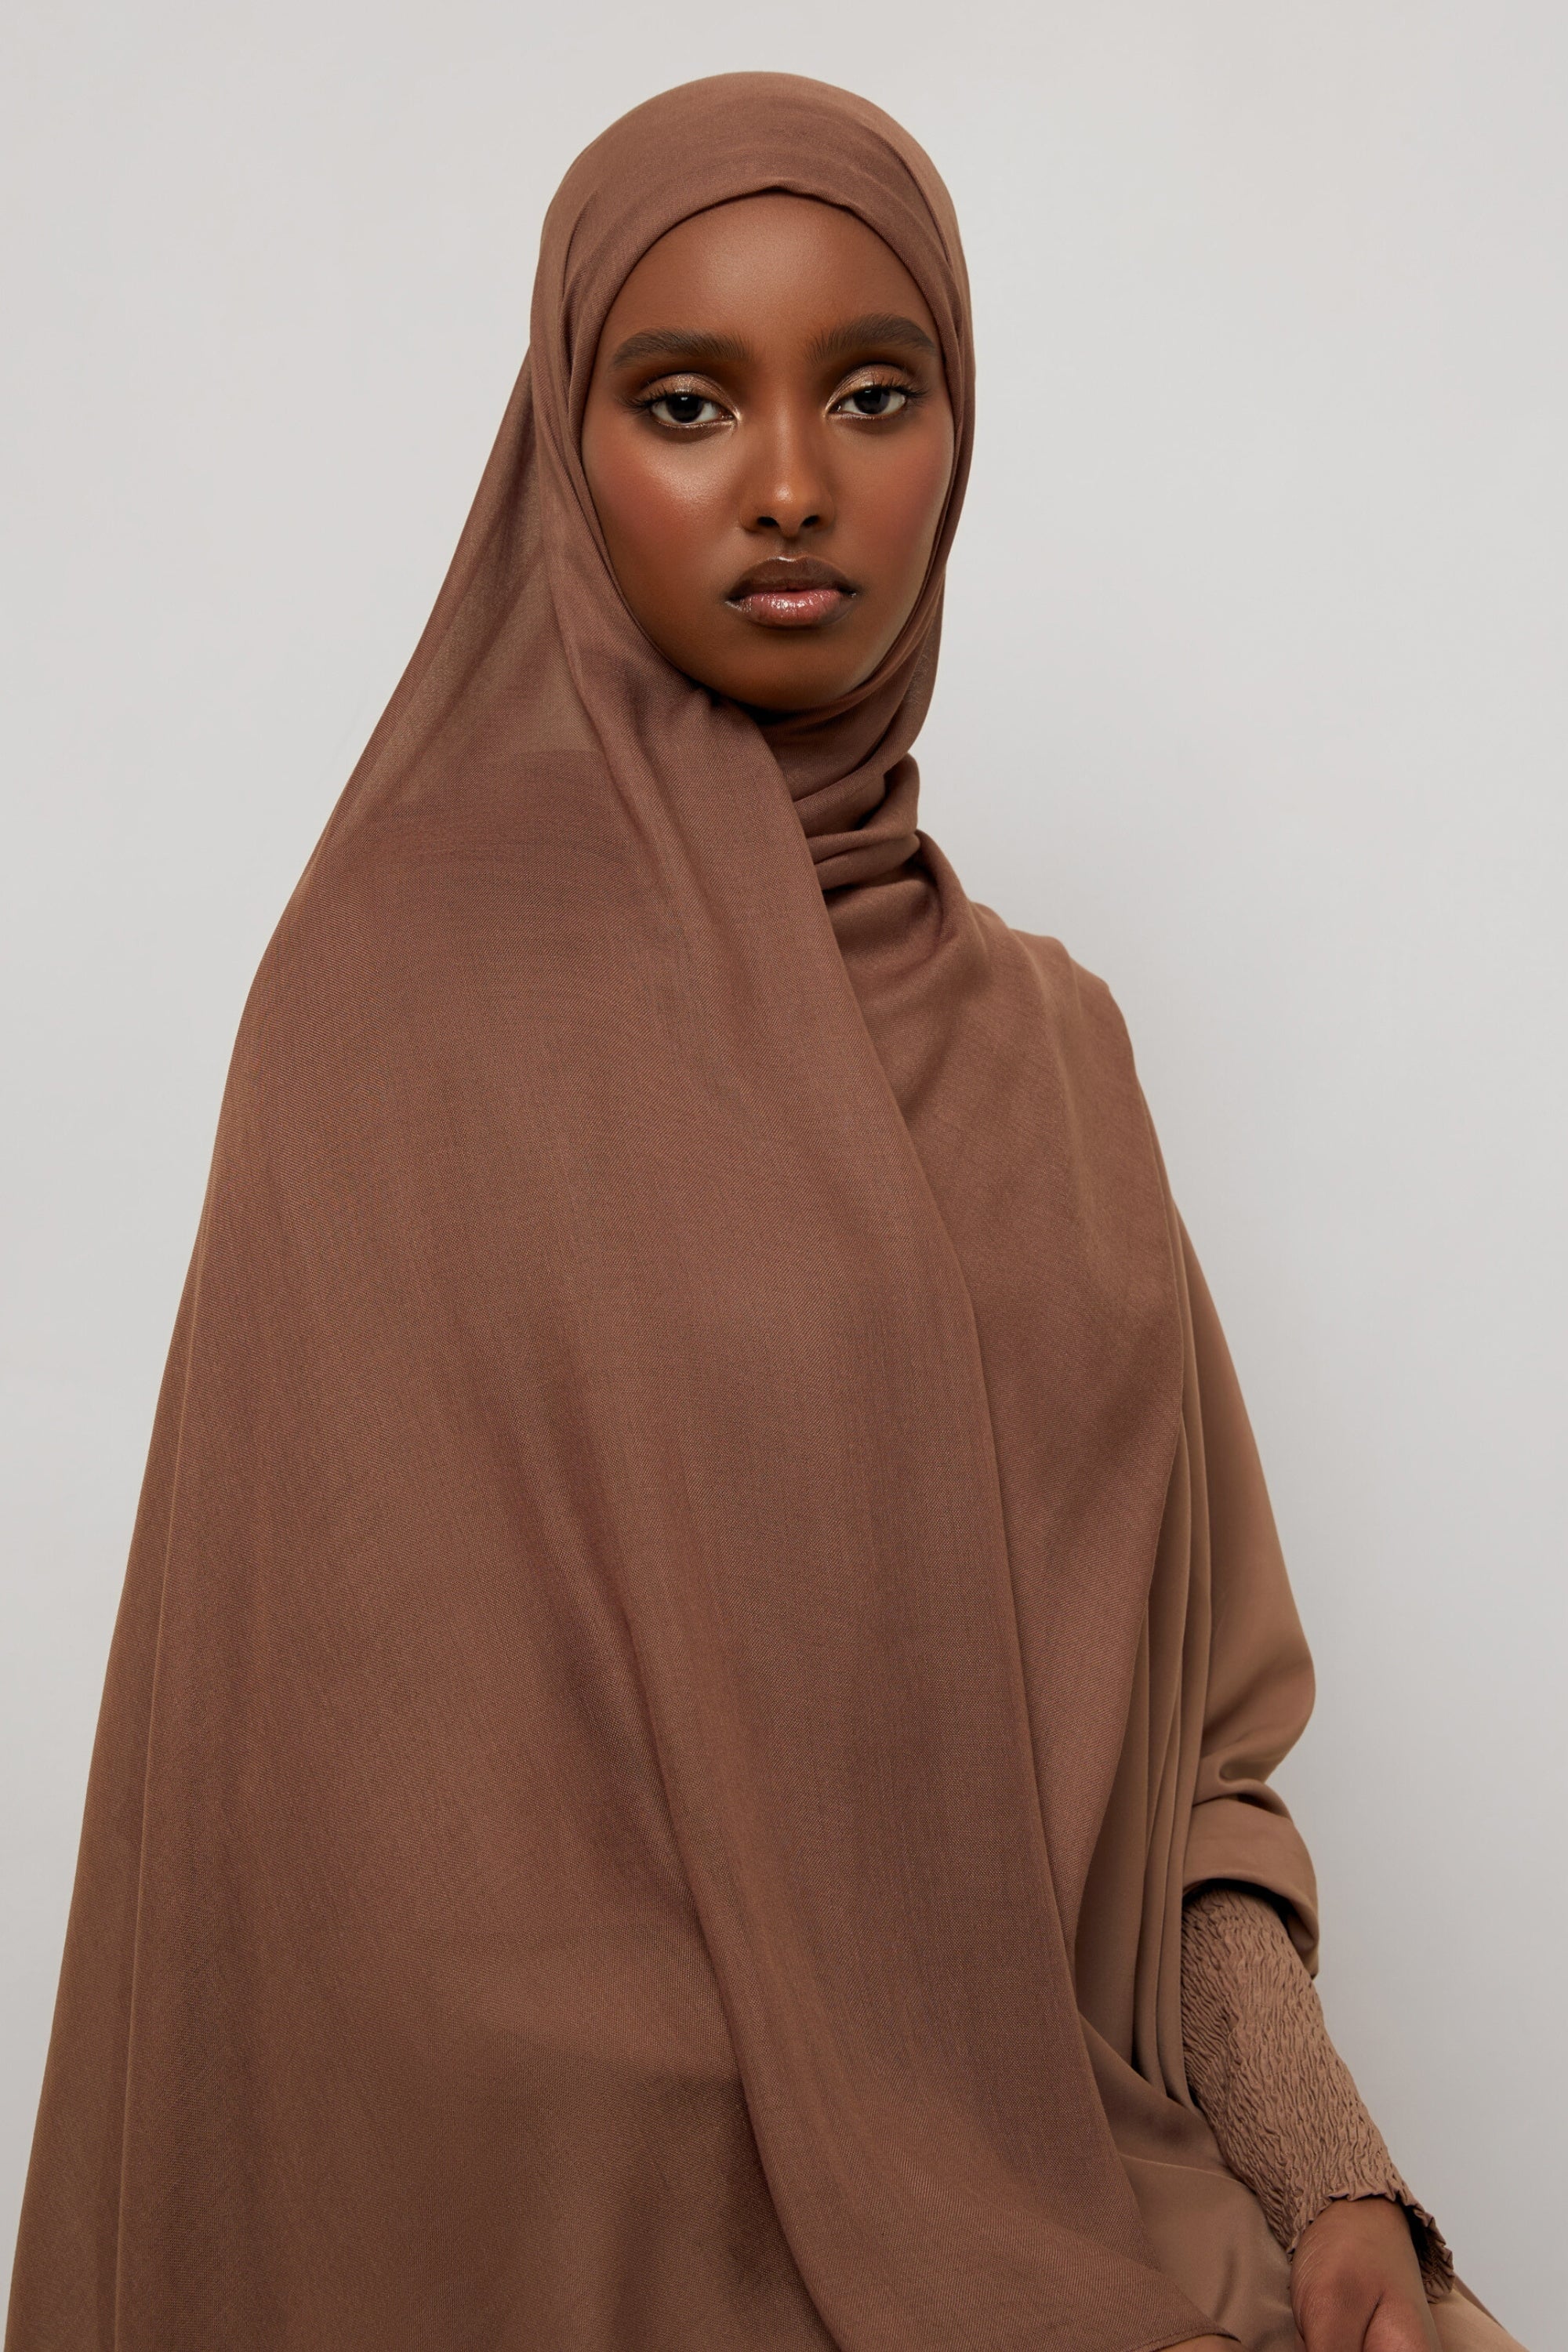 Bamboo Woven Hijab - Cocoa Brown Veiled 